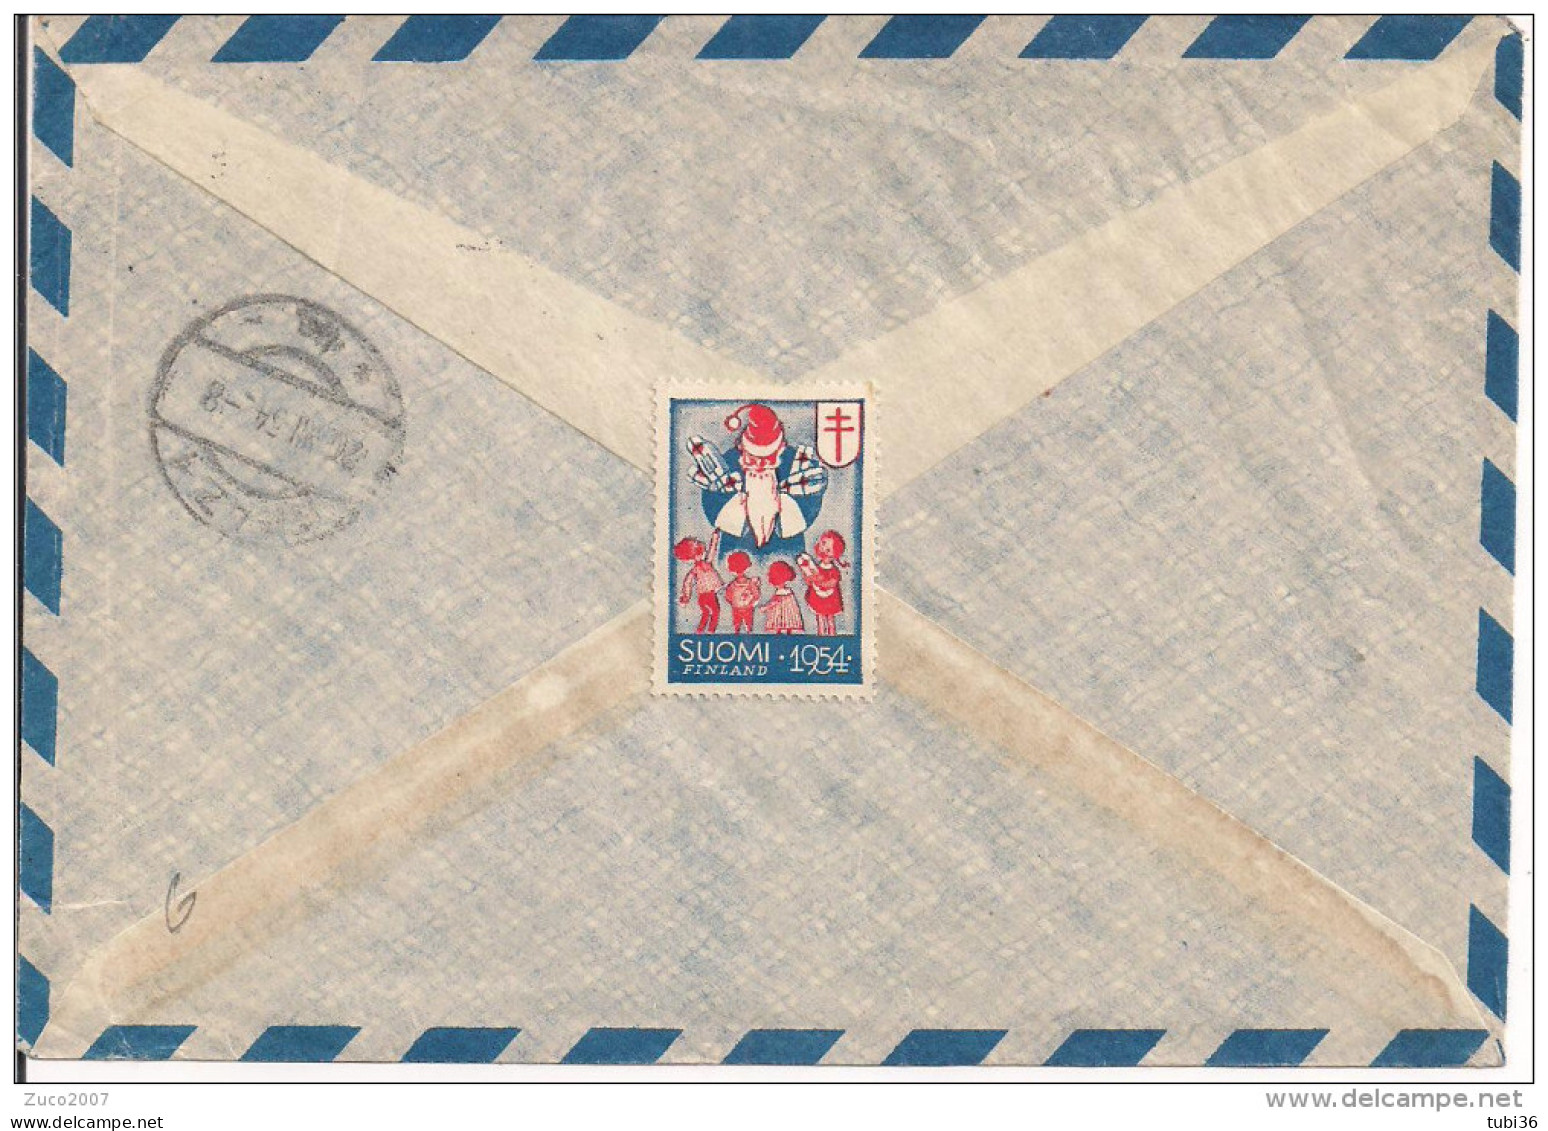 TAMPERE 1954,GRAZ AUSTRIA,VIA AEREA - Covers & Documents